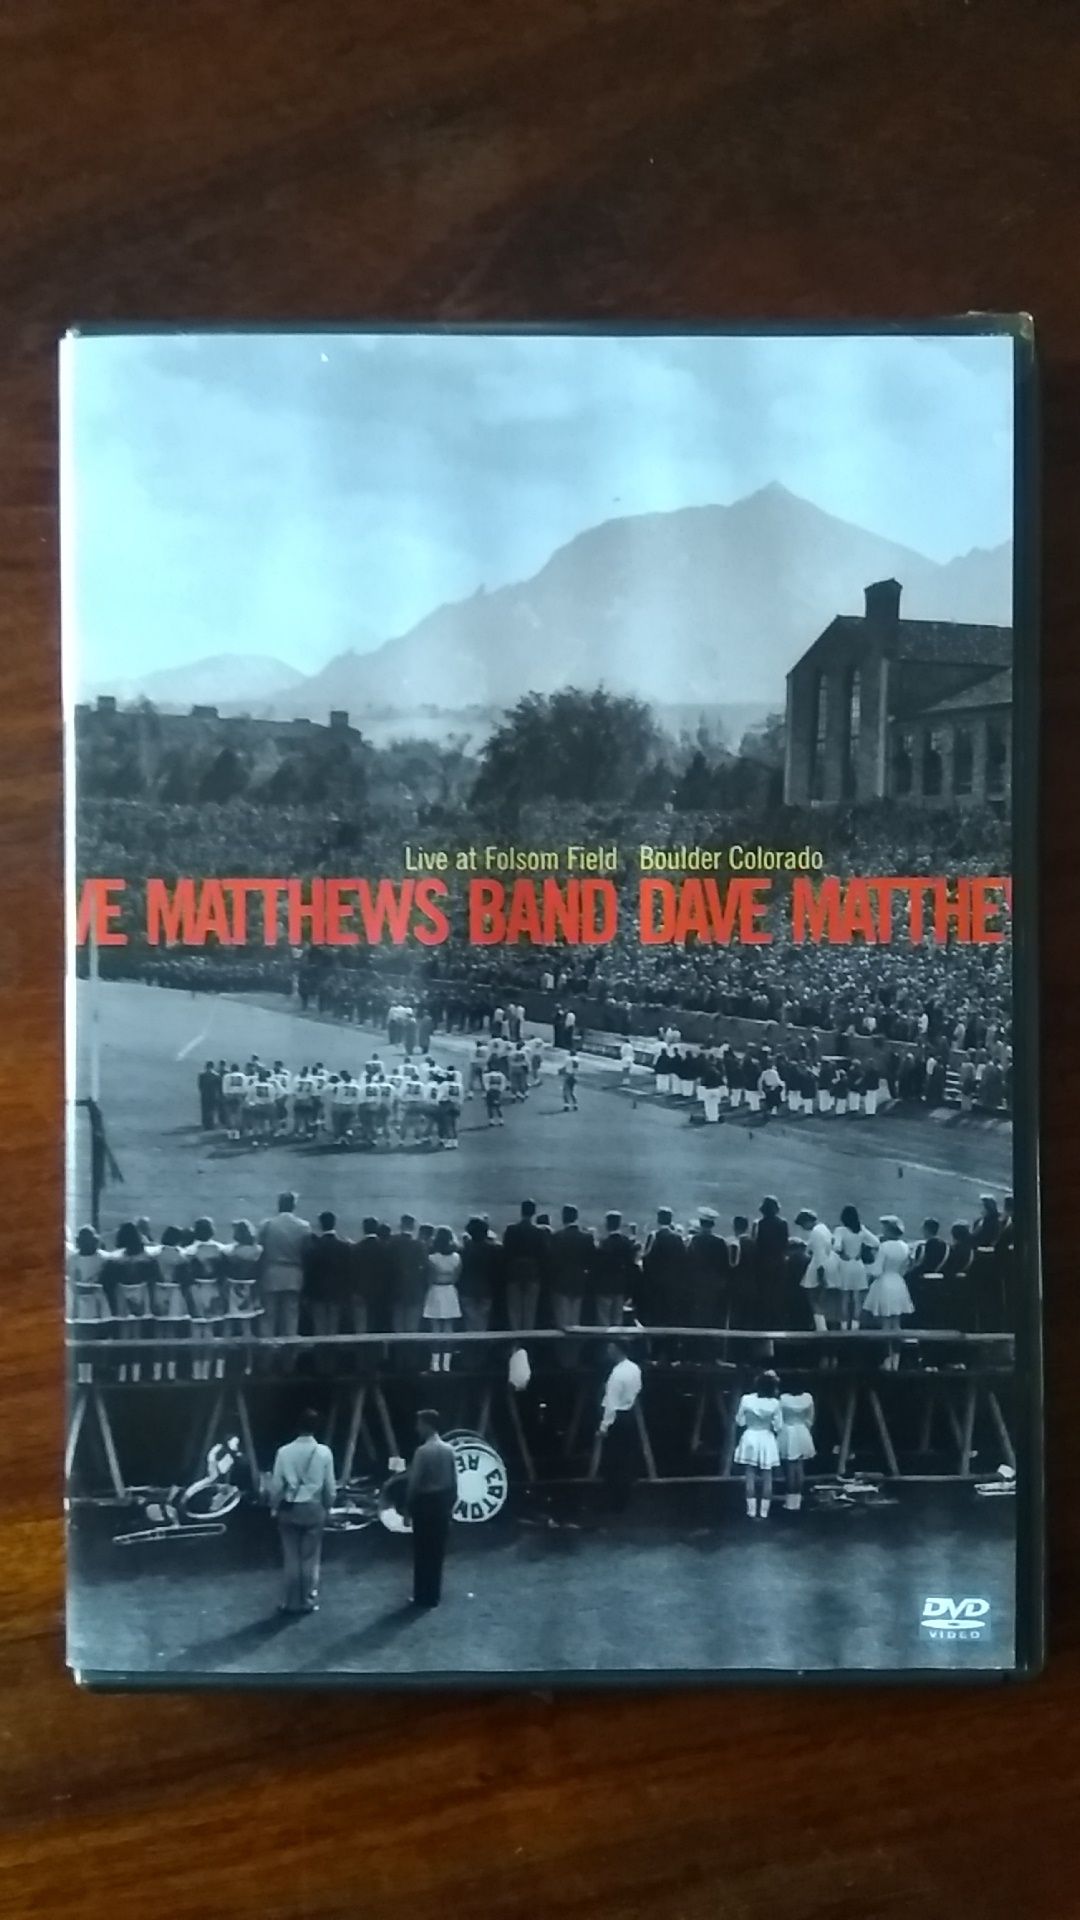 Dave Mathews Band, live dvd